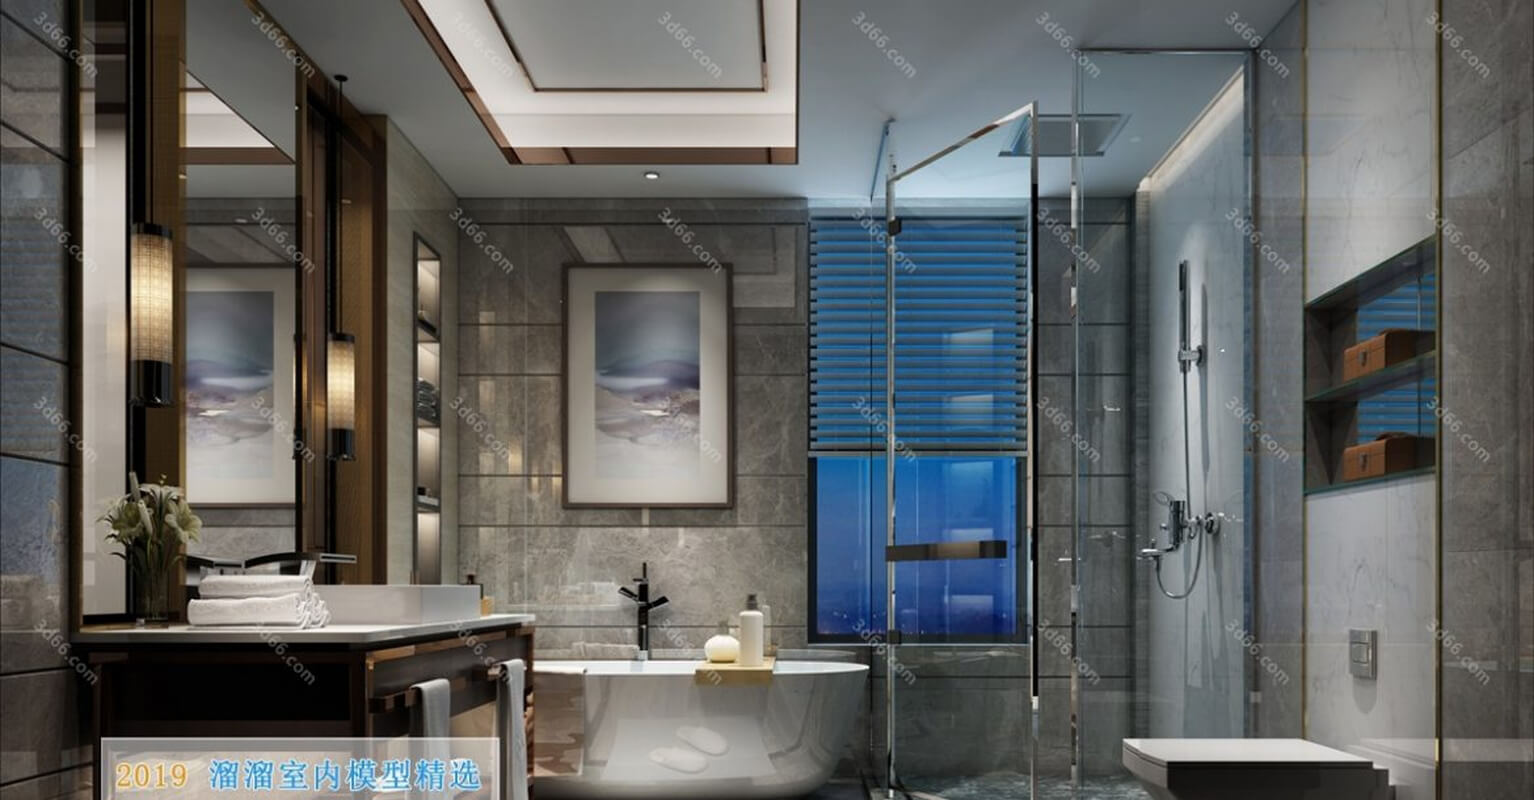 3D66 Toilet & Bathroom Interior 2019 Style (05)